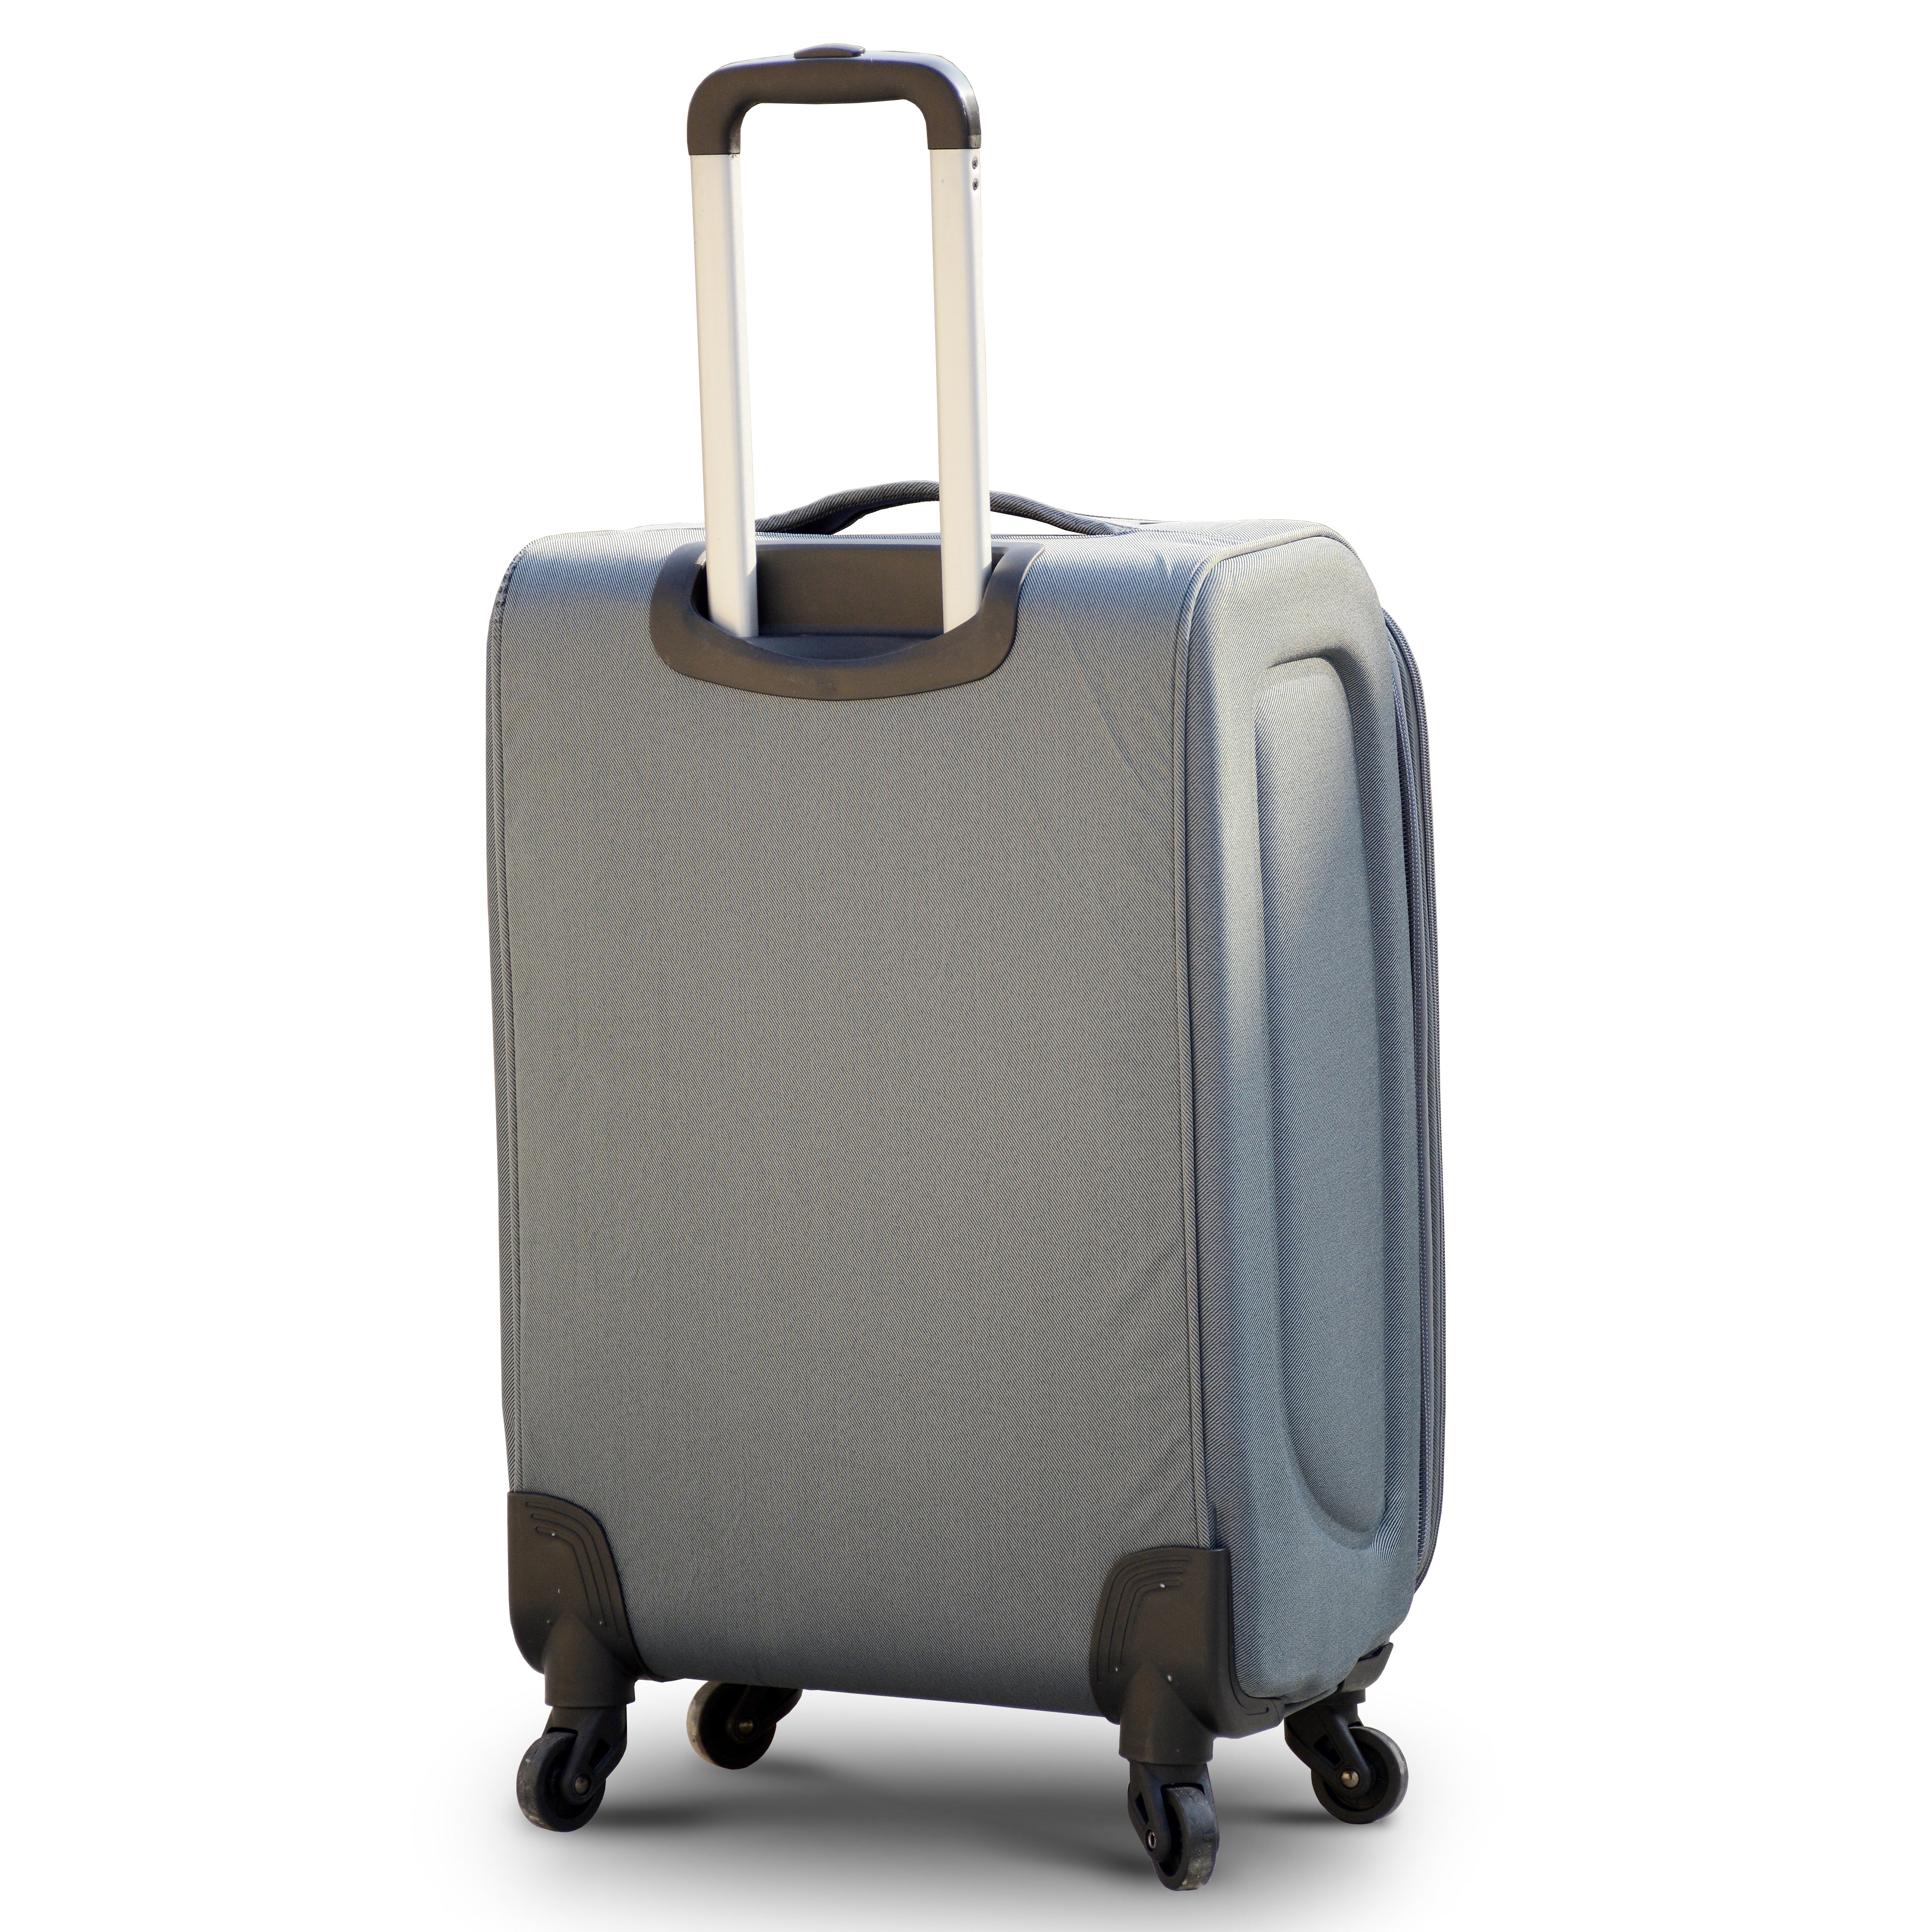 Soft Material Luggage | Soft Shell | Lightweight |  10 Kg - 20 Inches 4 Wheels | 2 Years Warranty | Jian 4 Wheel Grey